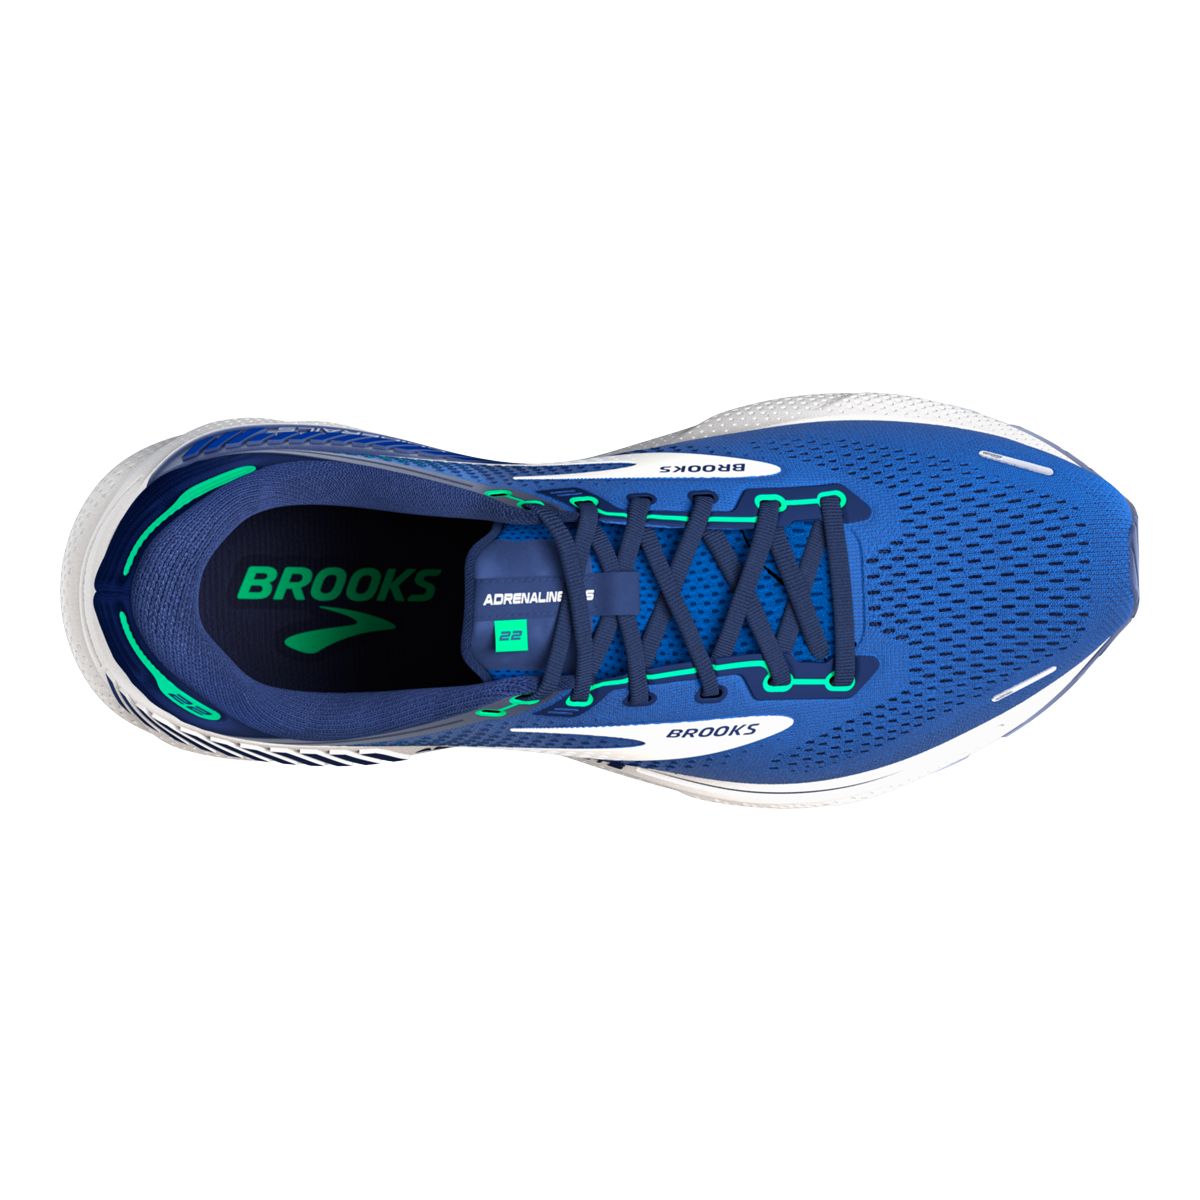  Brooks Men's Adrenaline GTS 22 Supportive Running Shoe -  Alloy/Grey/Black - 7 Medium